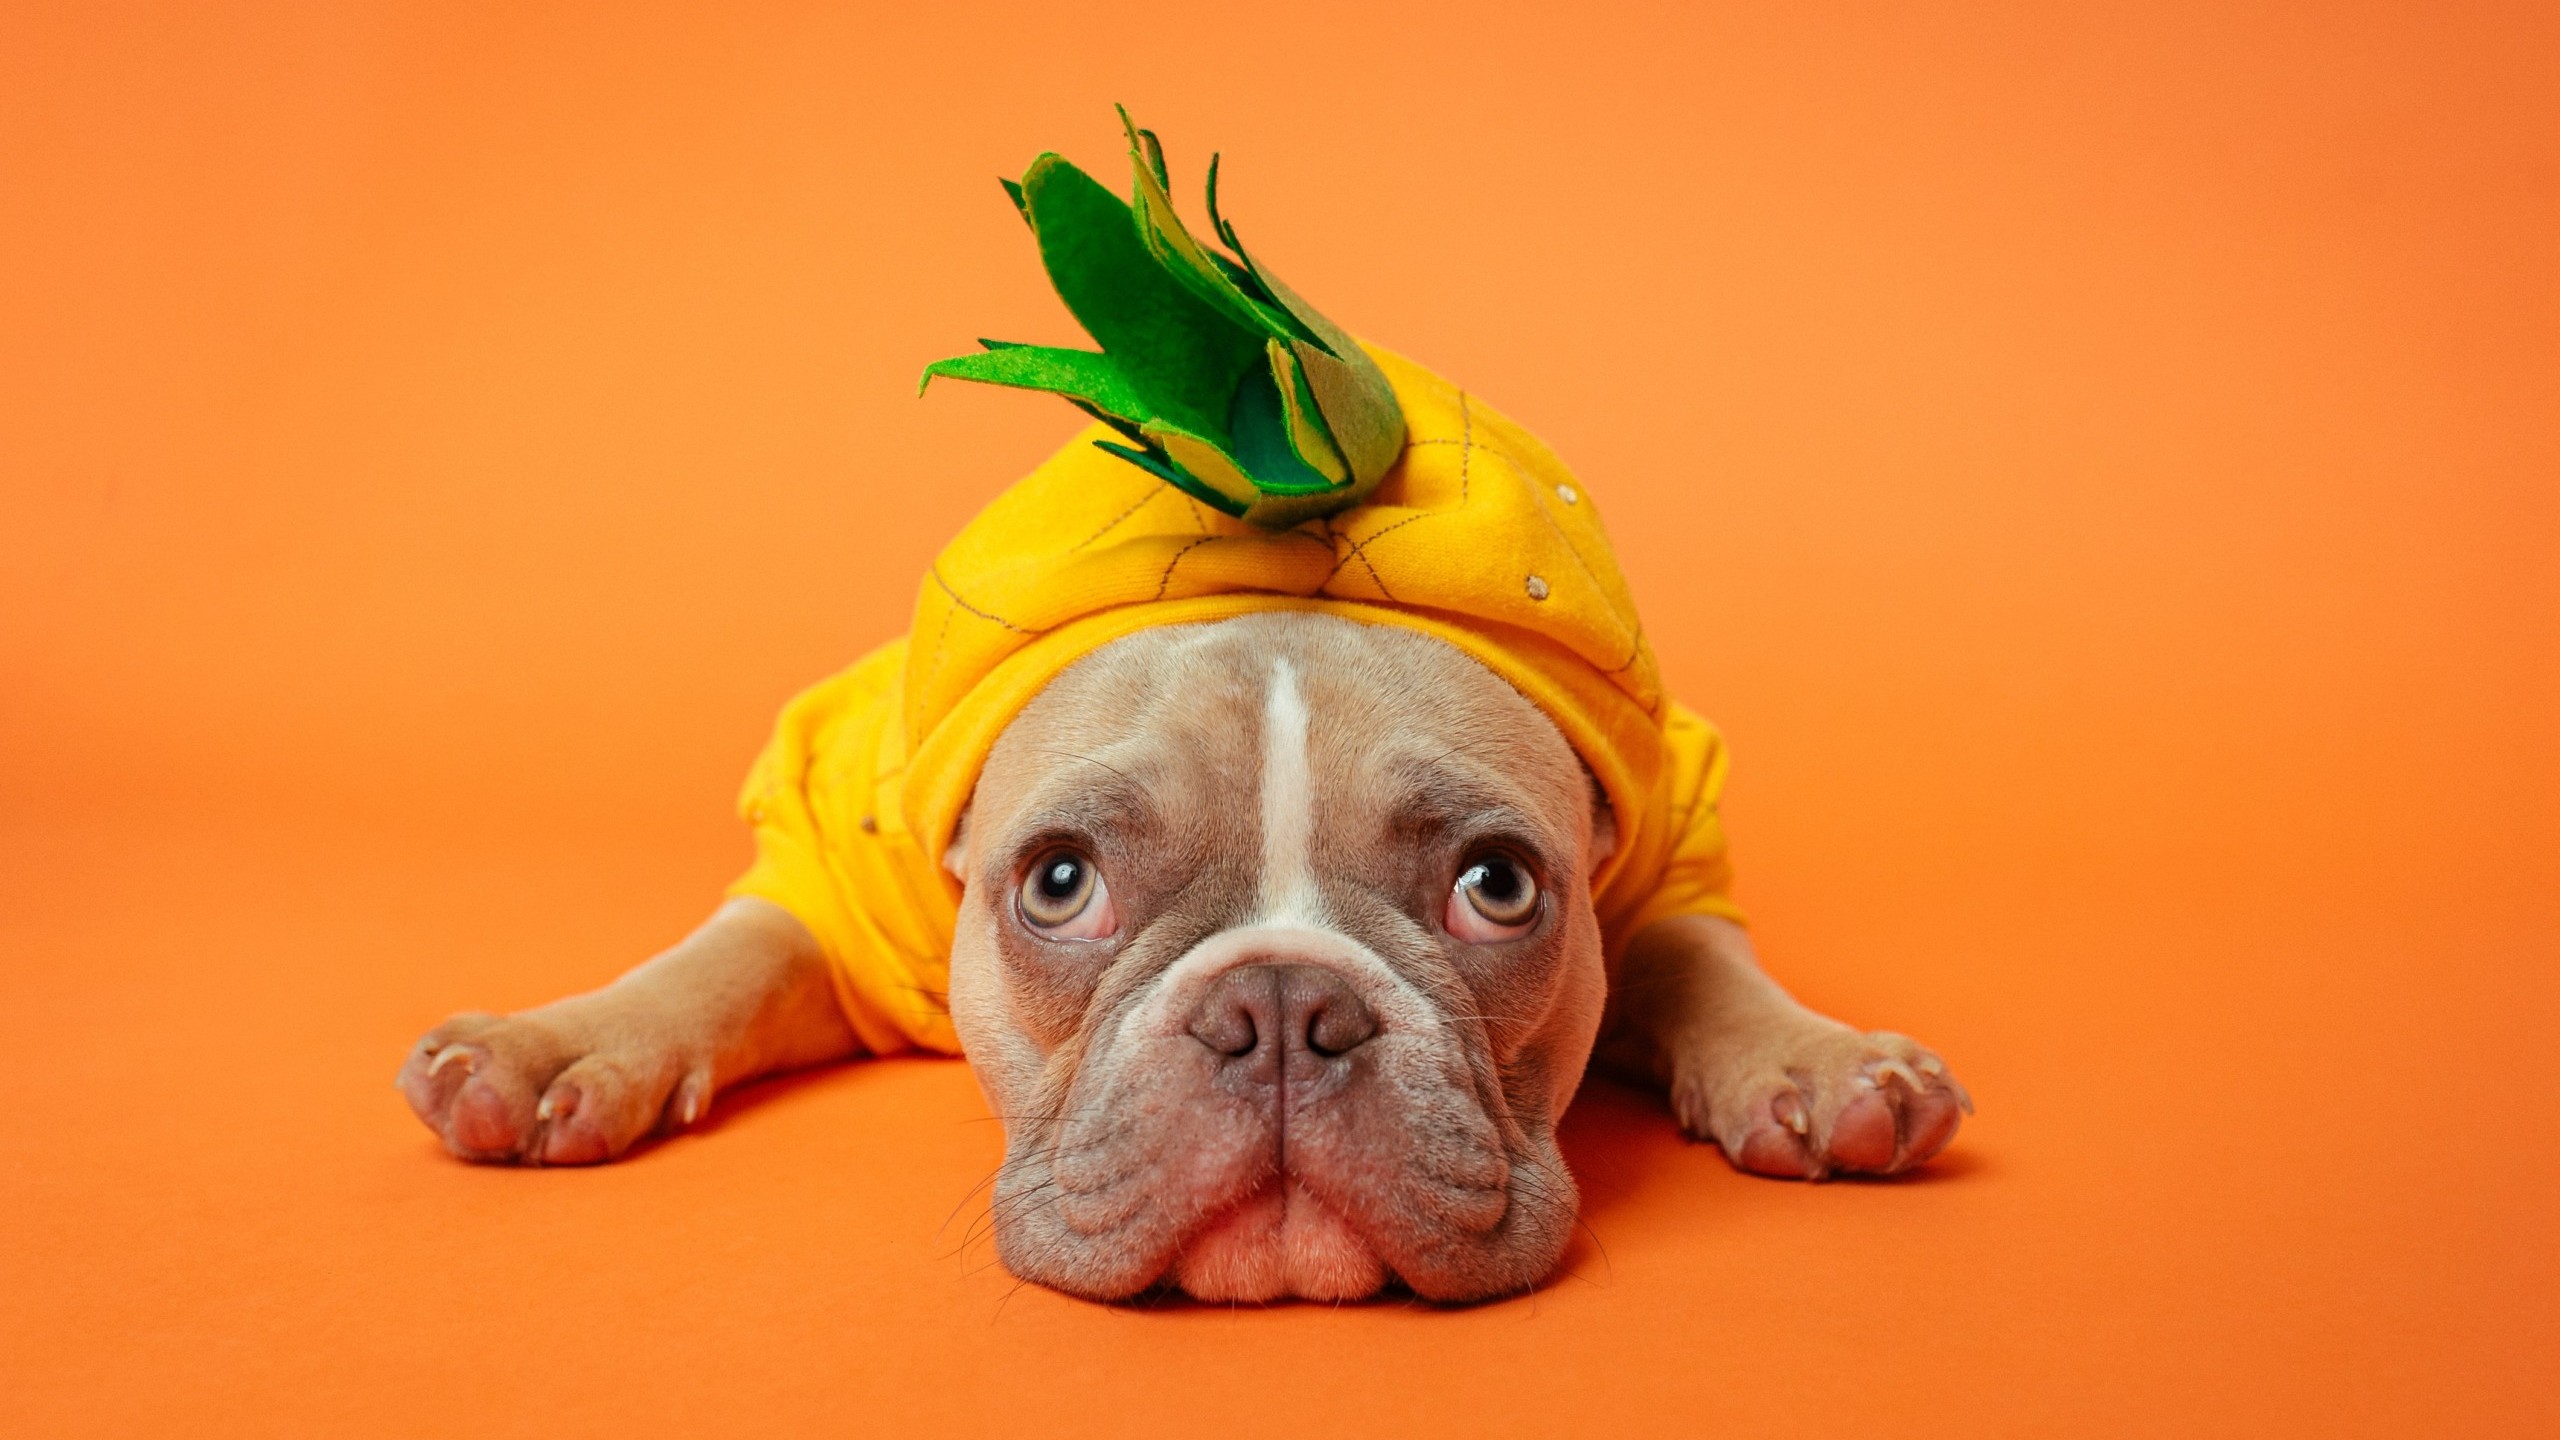 French bulldog wearing pineapple costume